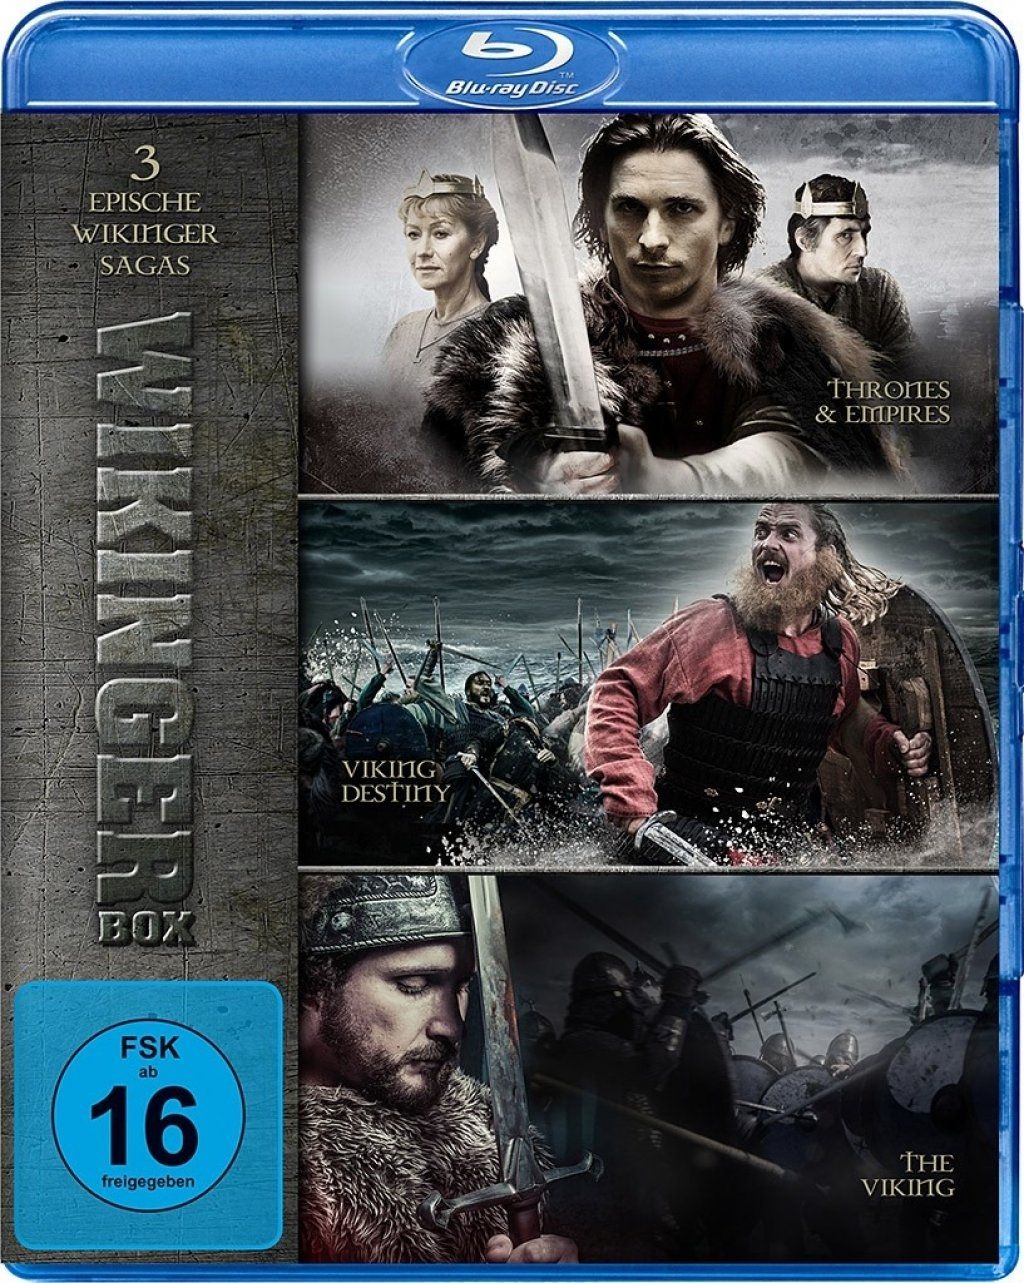 Thrones & Empires / Viking Destiny / The Viking (Wikinger Box) (3 Discs) (BLURAY)